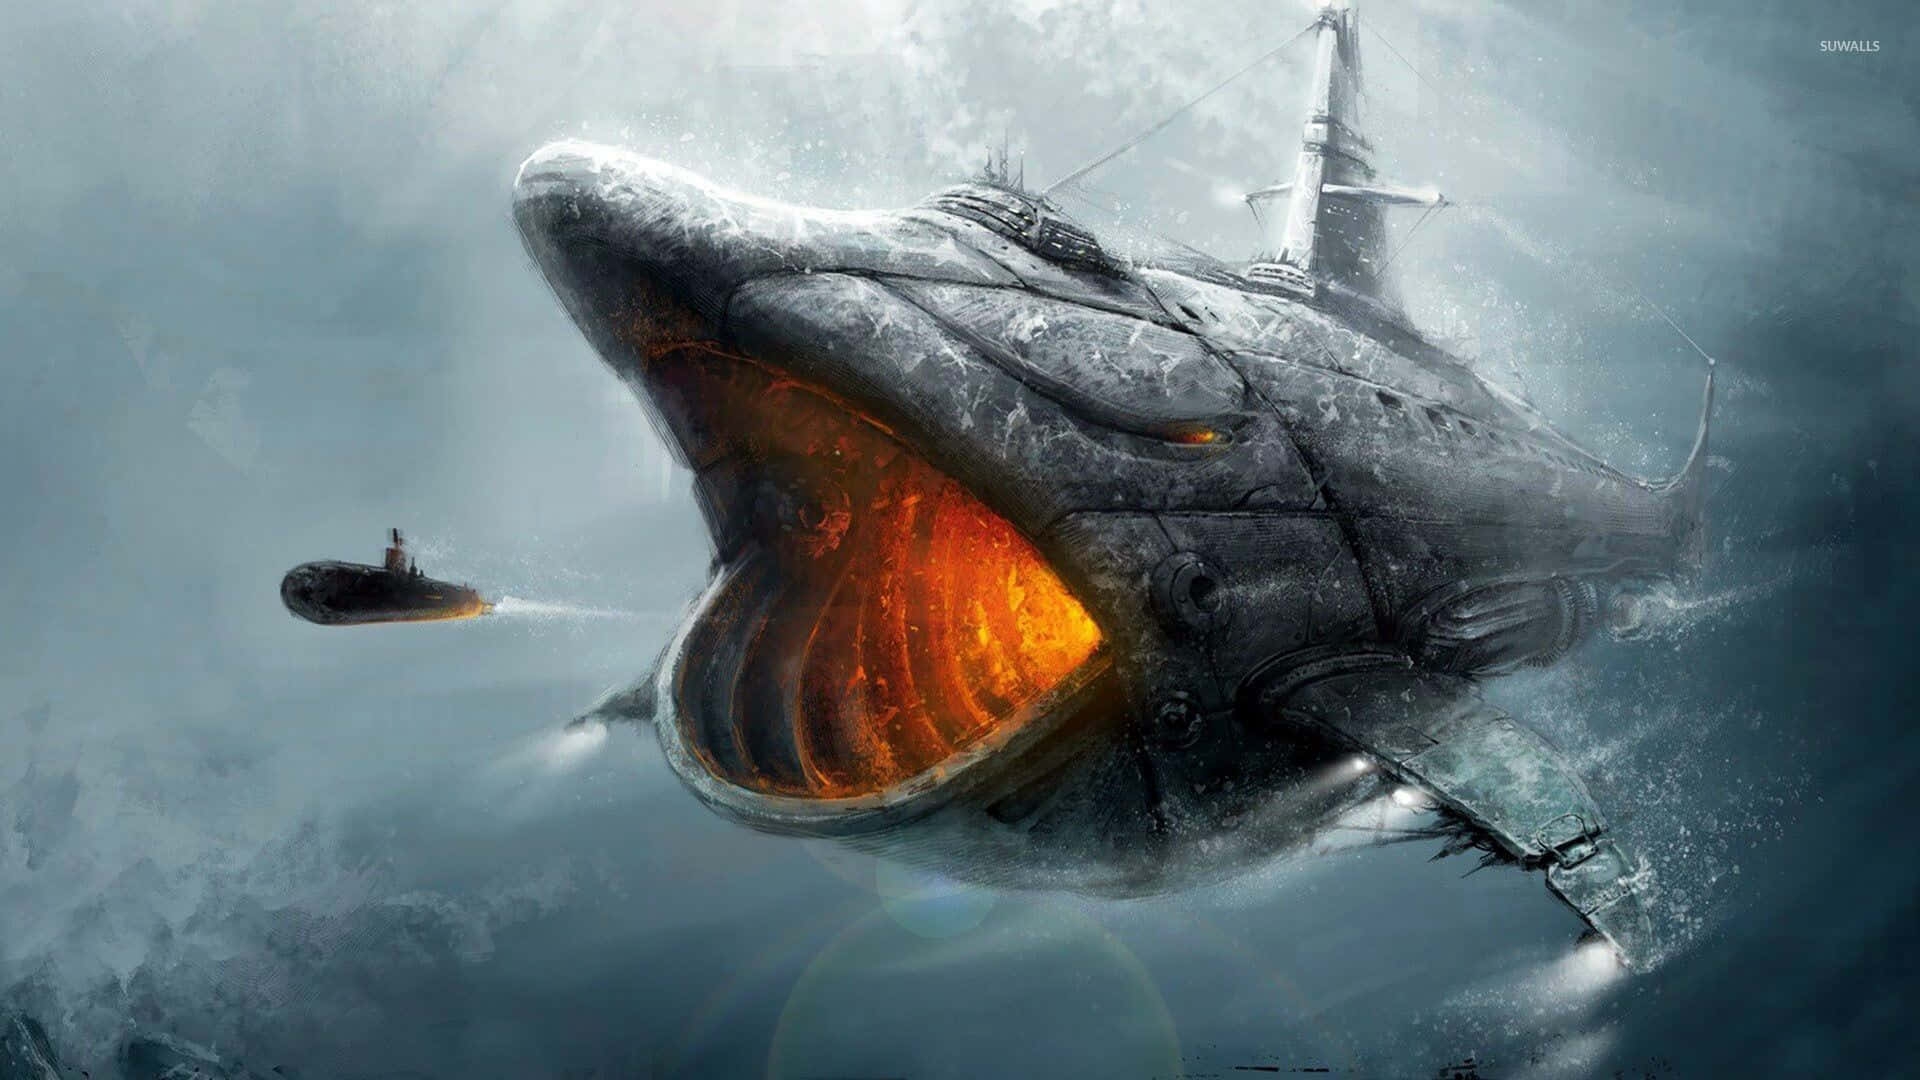 Imagende Un Megalodón Blindado Persiguiendo Un Pequeño Submarino